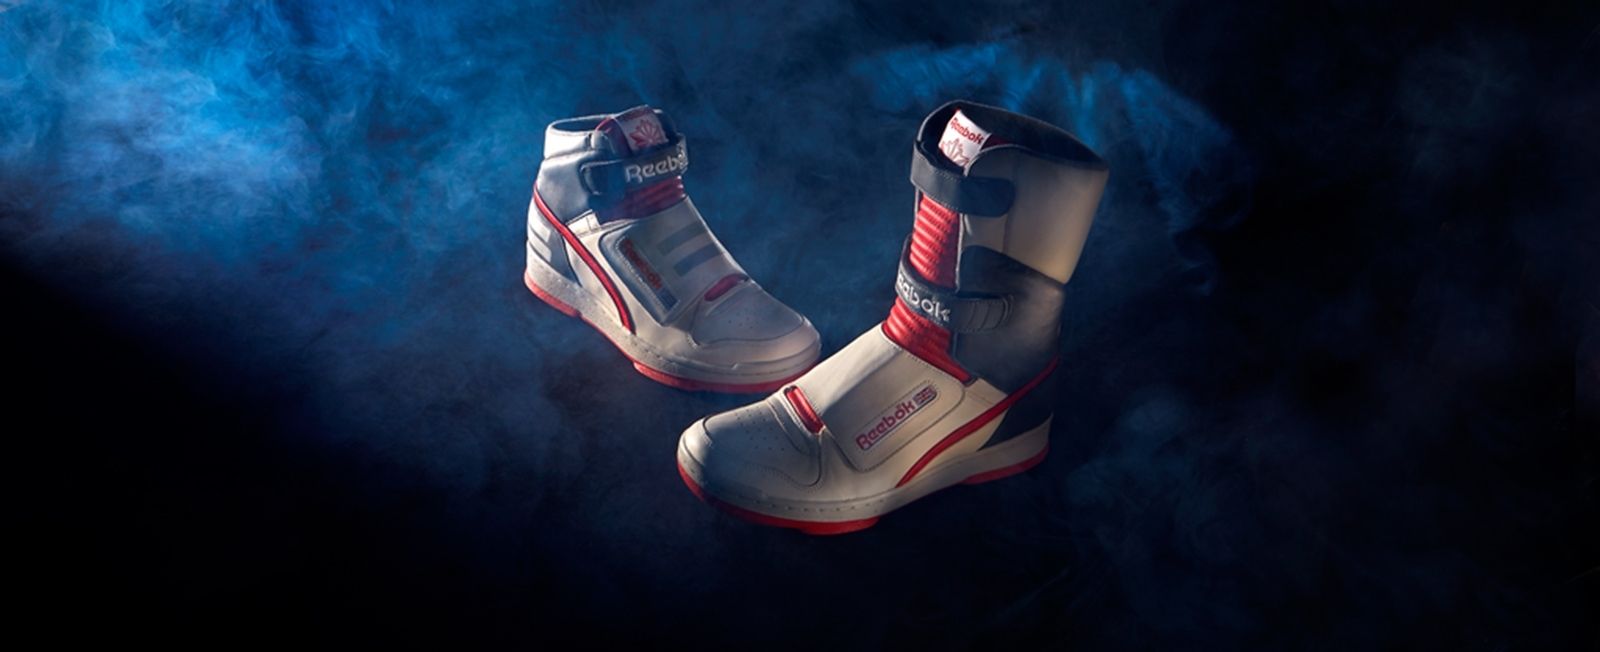 Limited Edition Reebok Alien Stomper Hi-Top Sneakers - Size 12